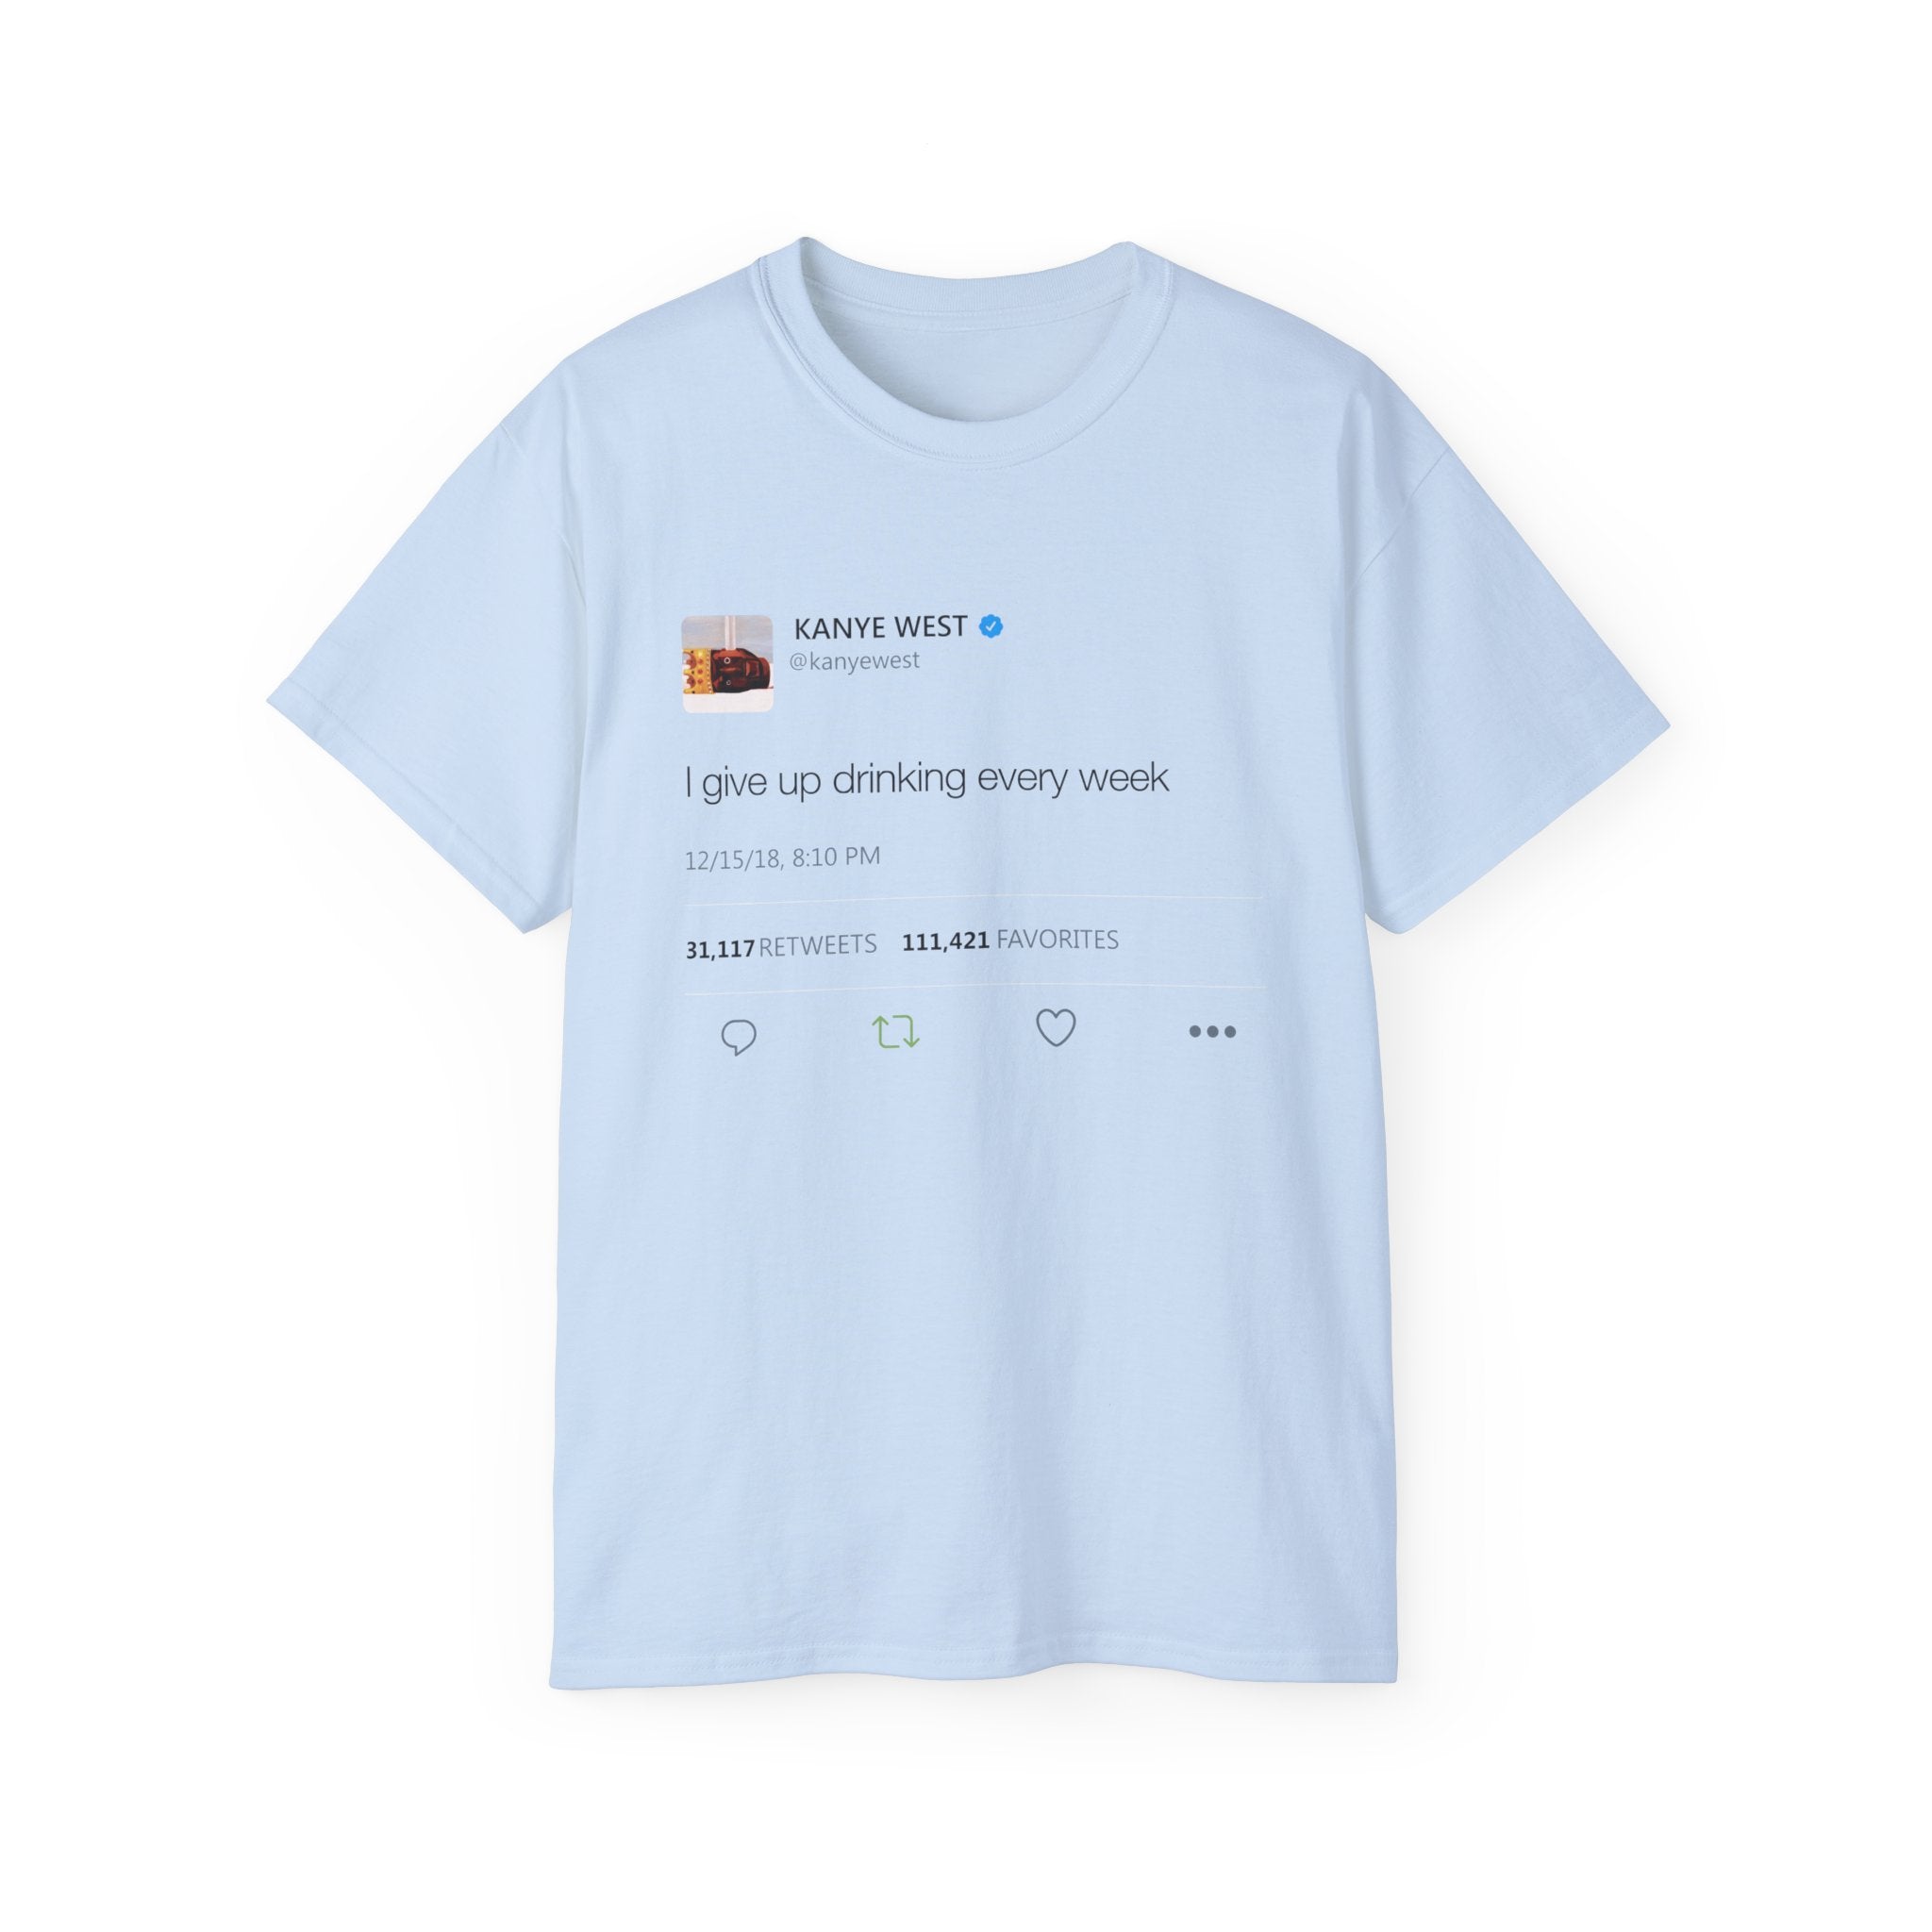 I give up drinking every week Kanye West Tweet T-Shirt